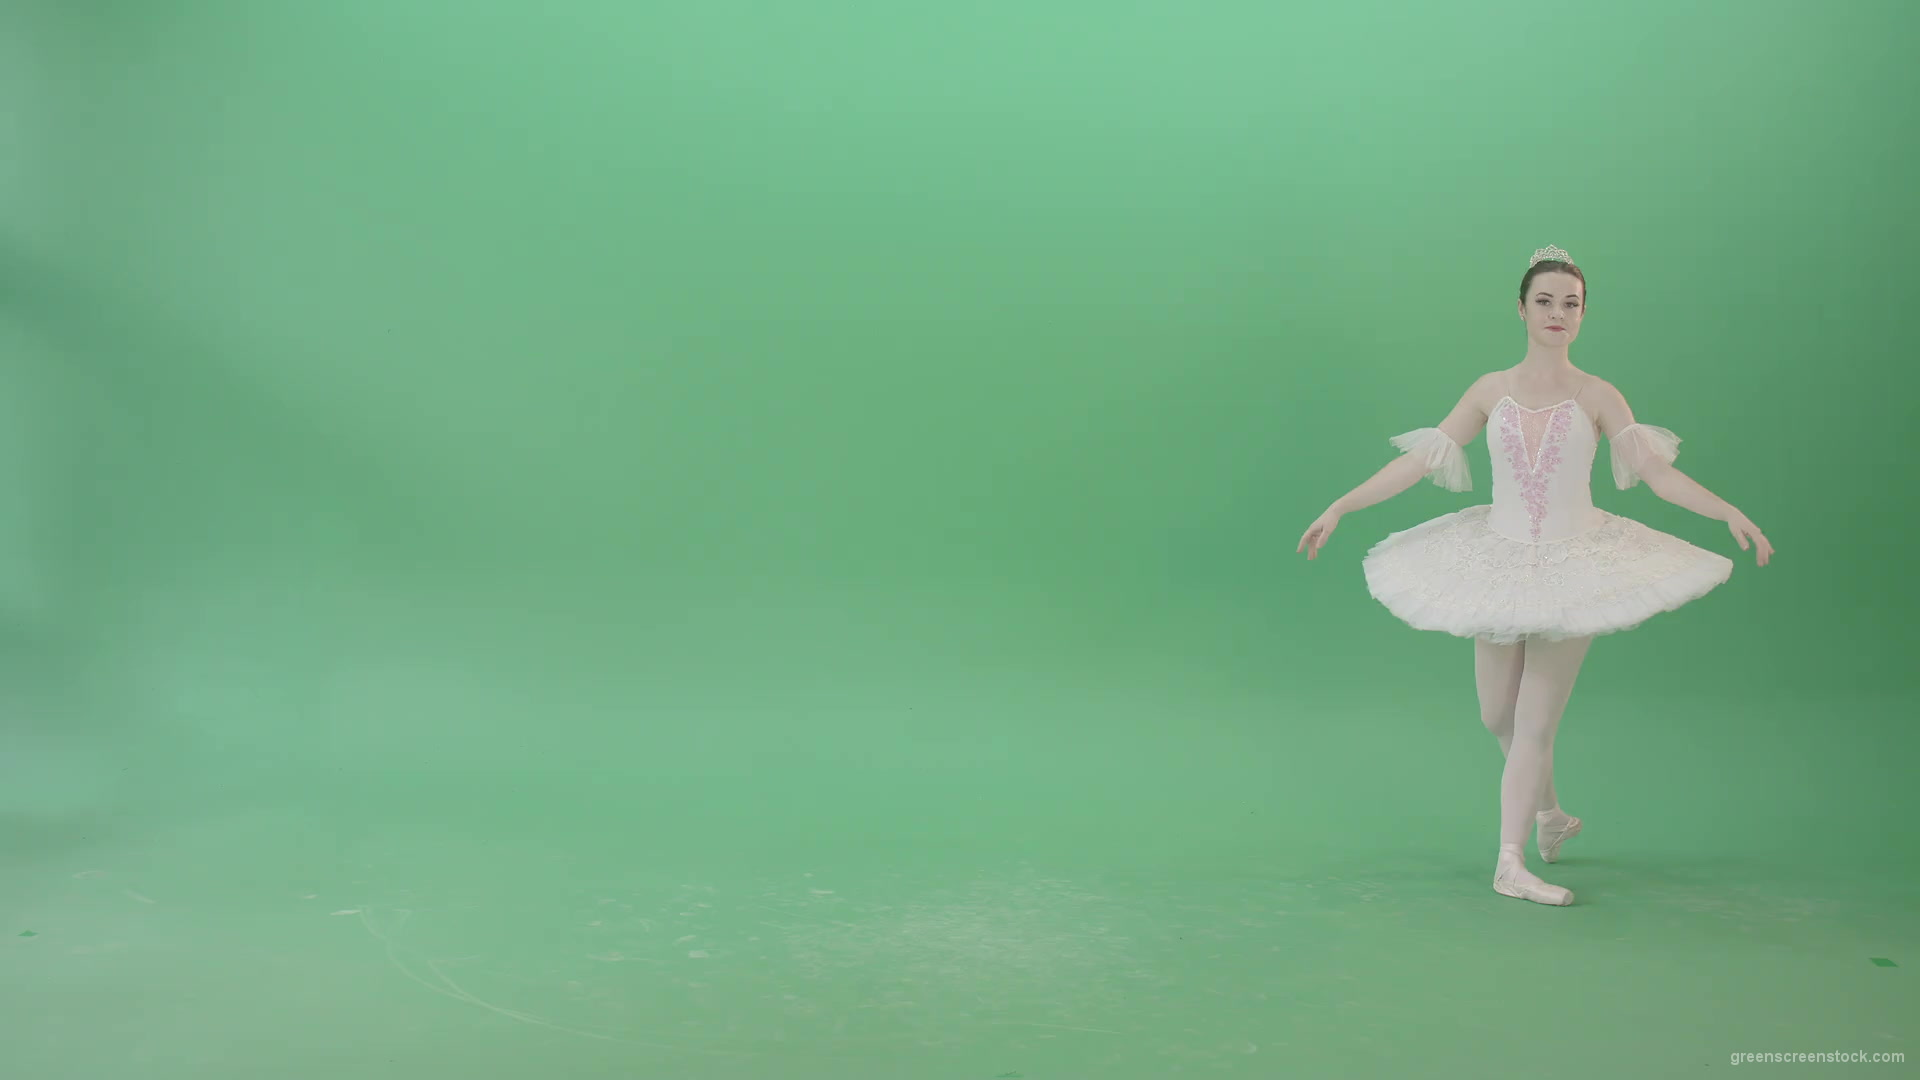 Flexibility-ballet-dancing-performance-girl-dancing-Classical-adagio-opera-on-green-screen-4K-Video-footage-1920_001 Green Screen Stock